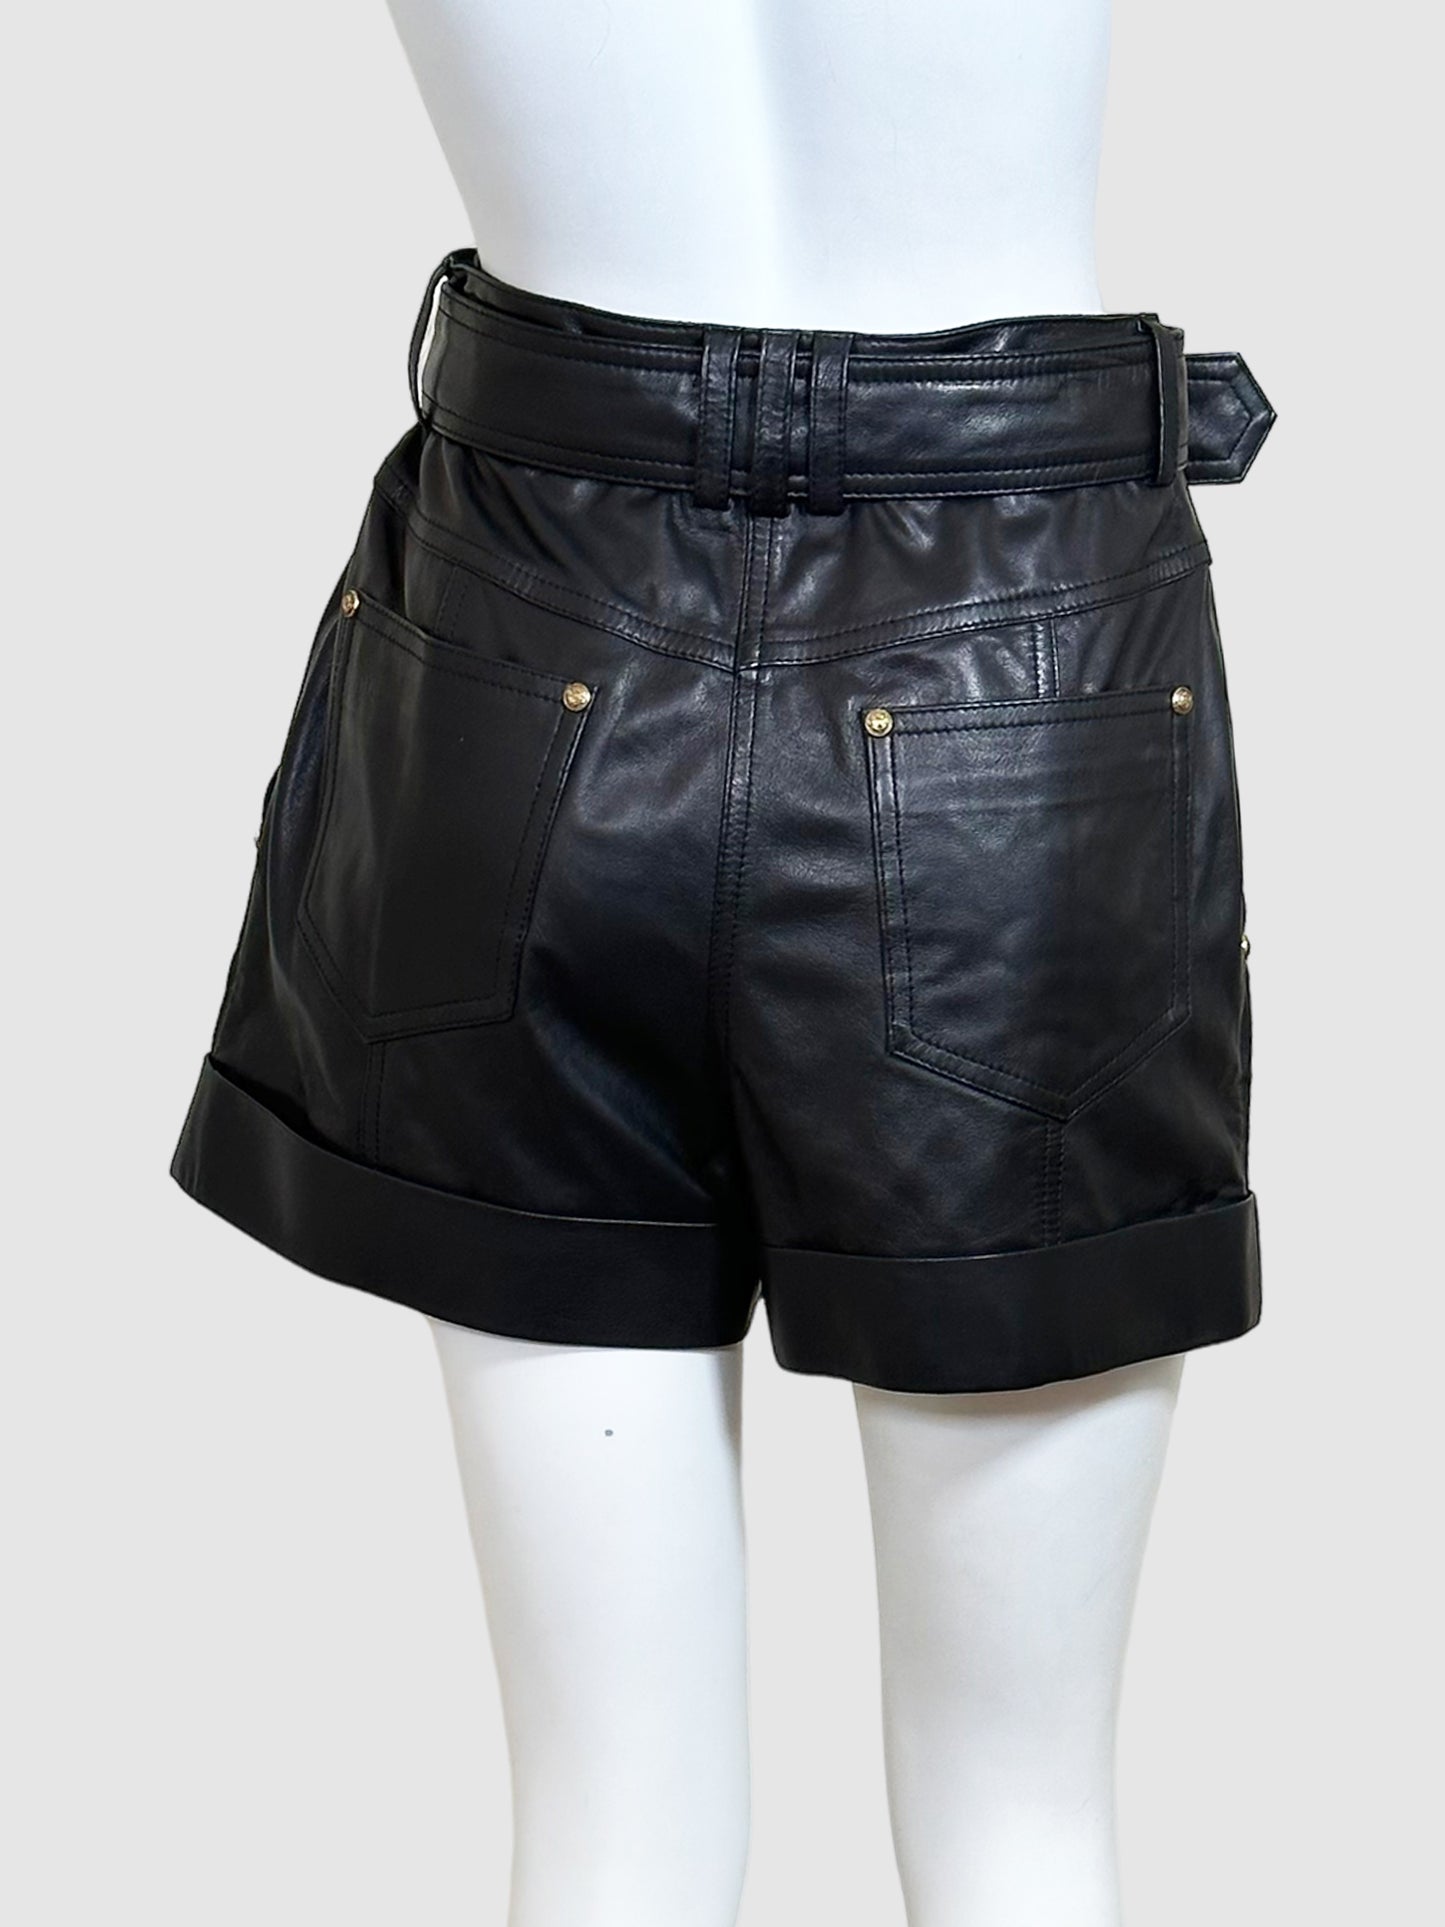 Balmain Belted Leather Shorts - Size 38